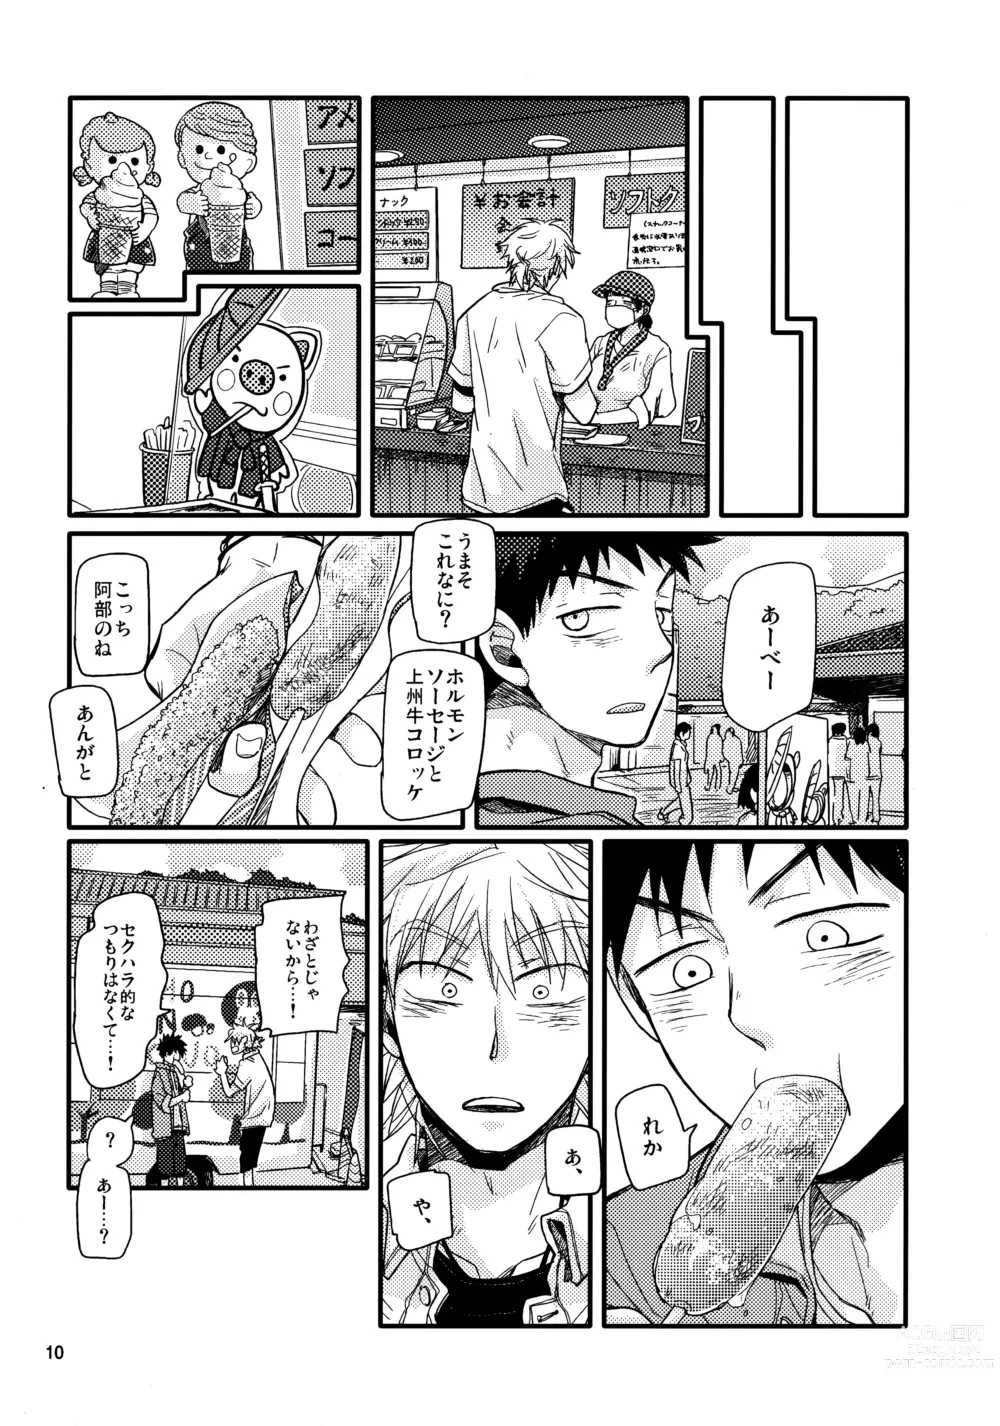 Page 9 of doujinshi Kaki